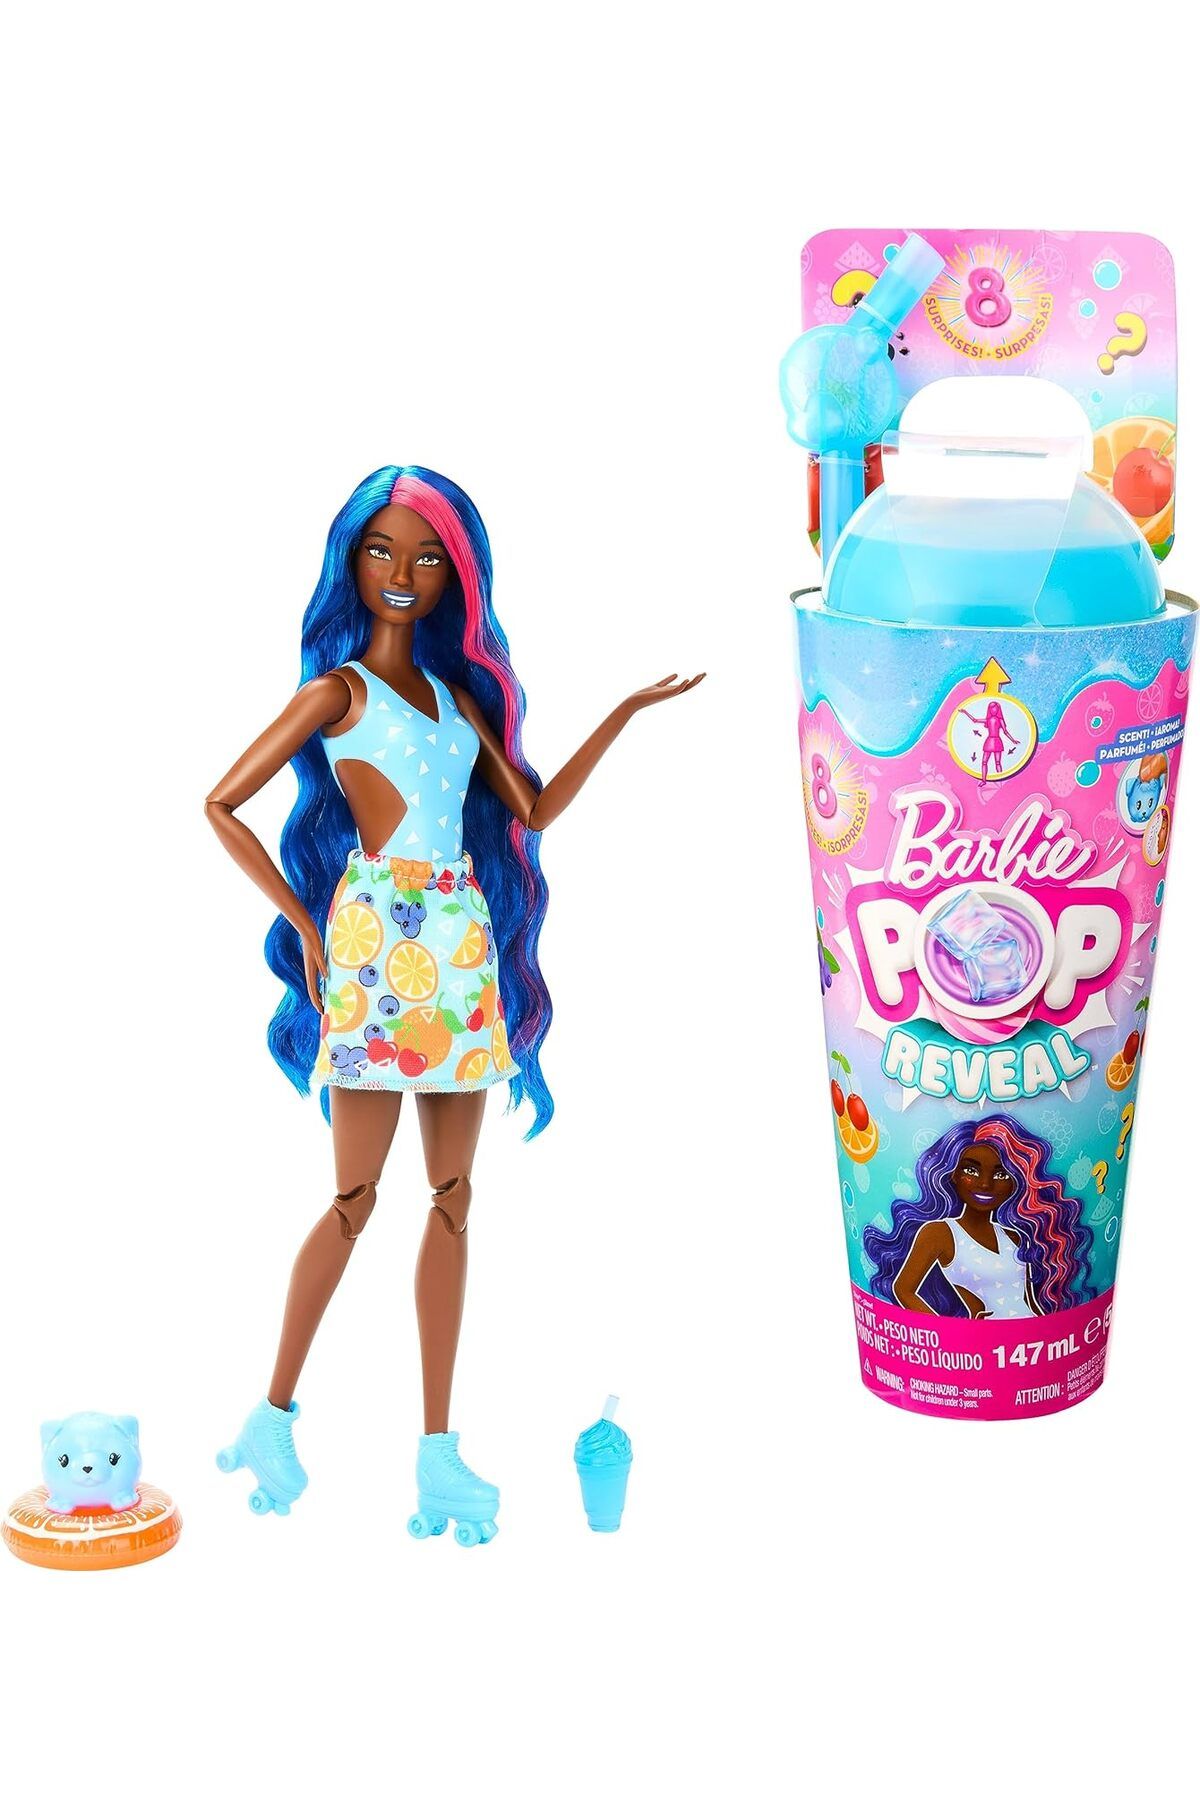 Barbie Pop Reveal Bebek Meyve Serisi Meyve Suyu Eklemli Barbie HNW40-HNW42